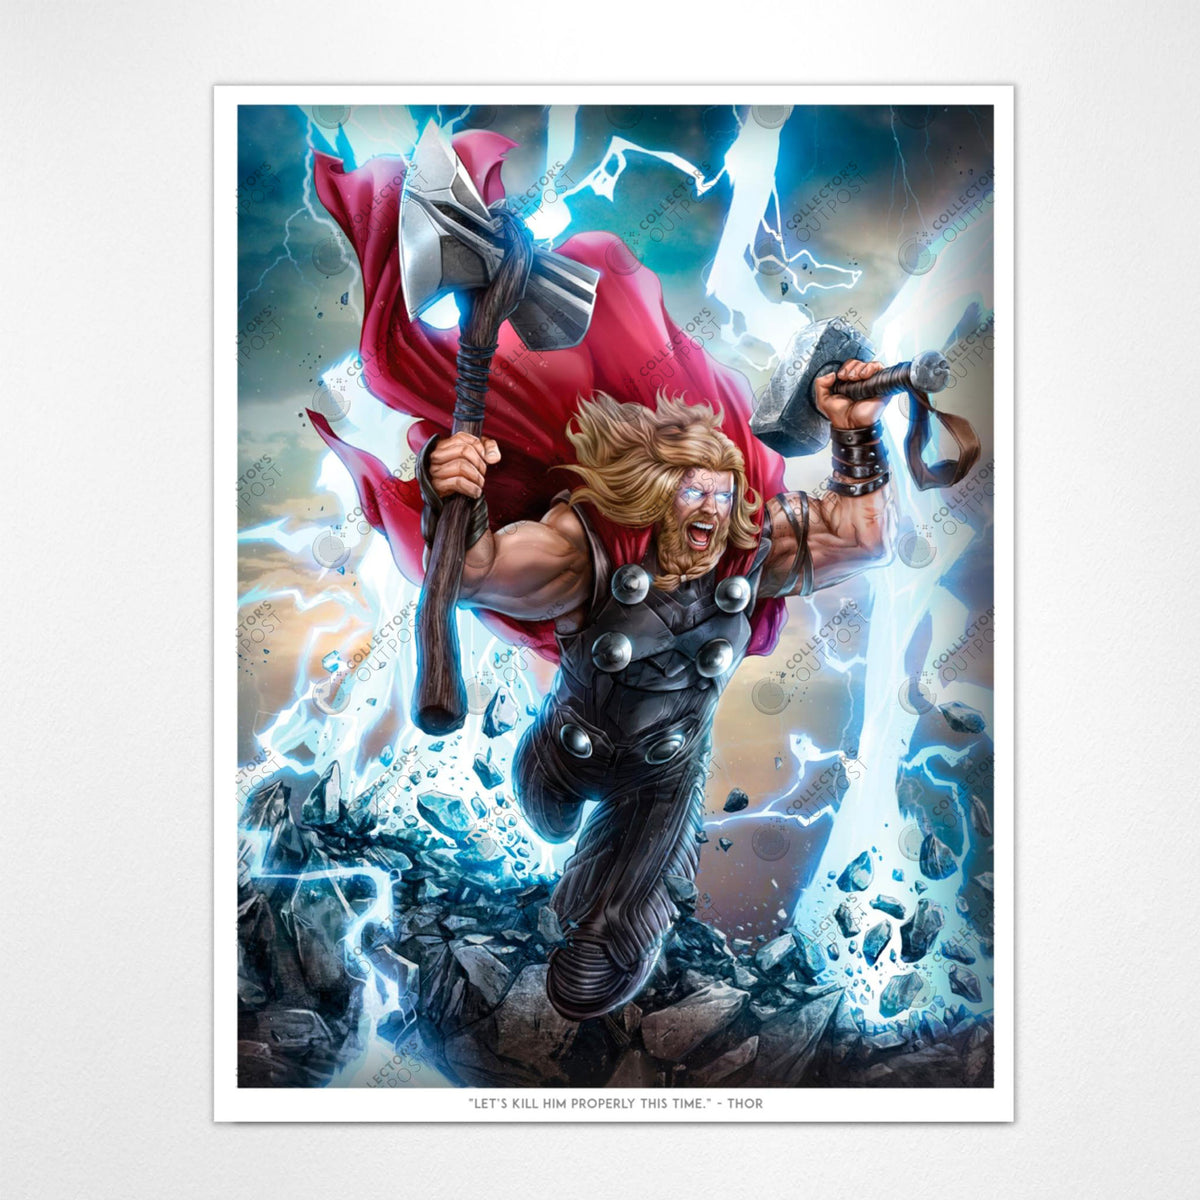 Plaque US - Thor - 30x40cm - Comics